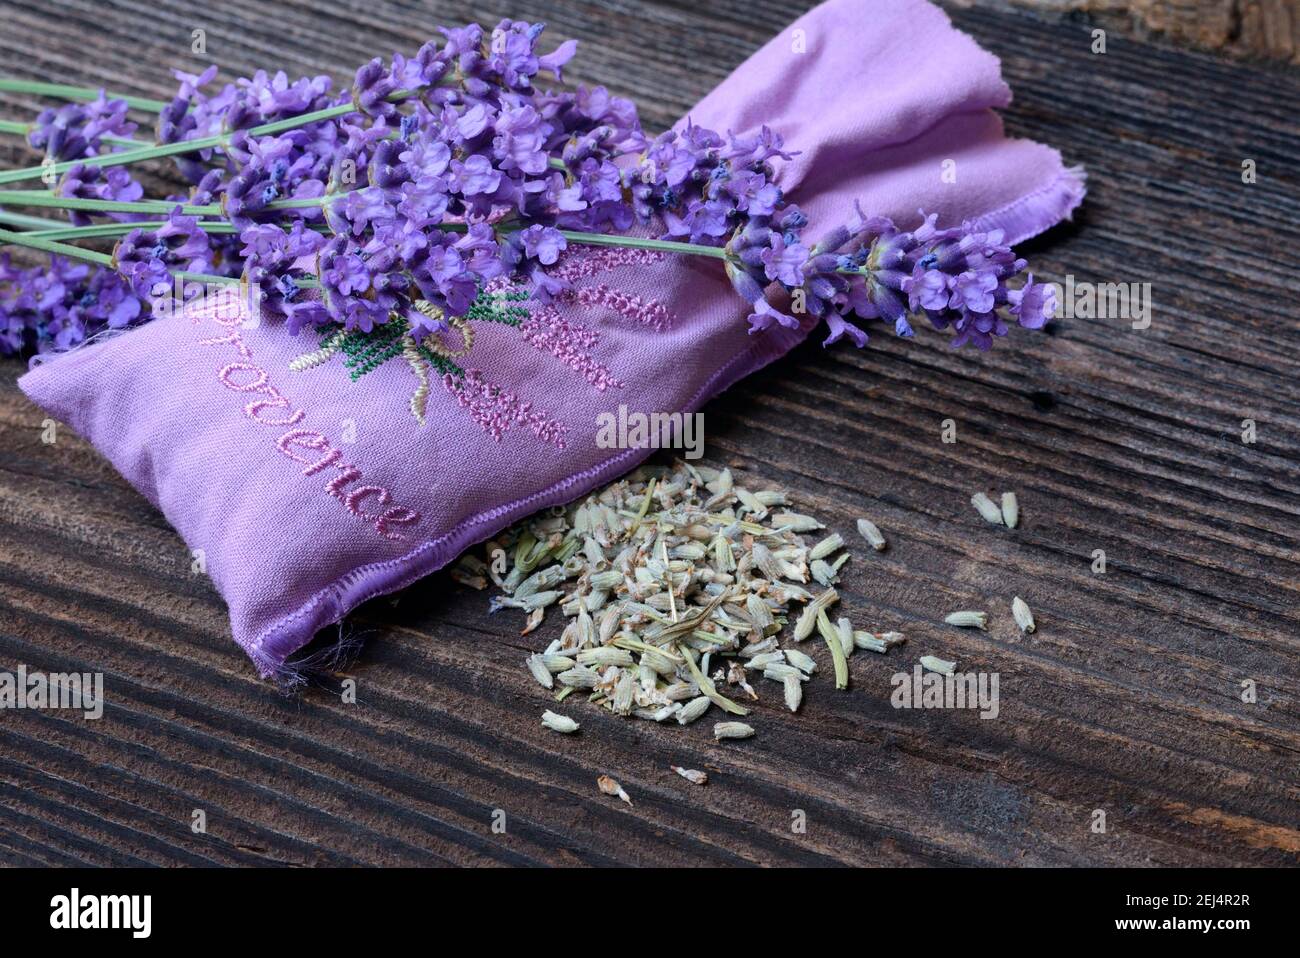 https://c8.alamy.com/comp/2EJ4R2R/lavender-lavandula-angustifolia-dried-lavender-flowers-scented-sachets-lavender-bags-lavender-scent-lavender-aroma-2EJ4R2R.jpg